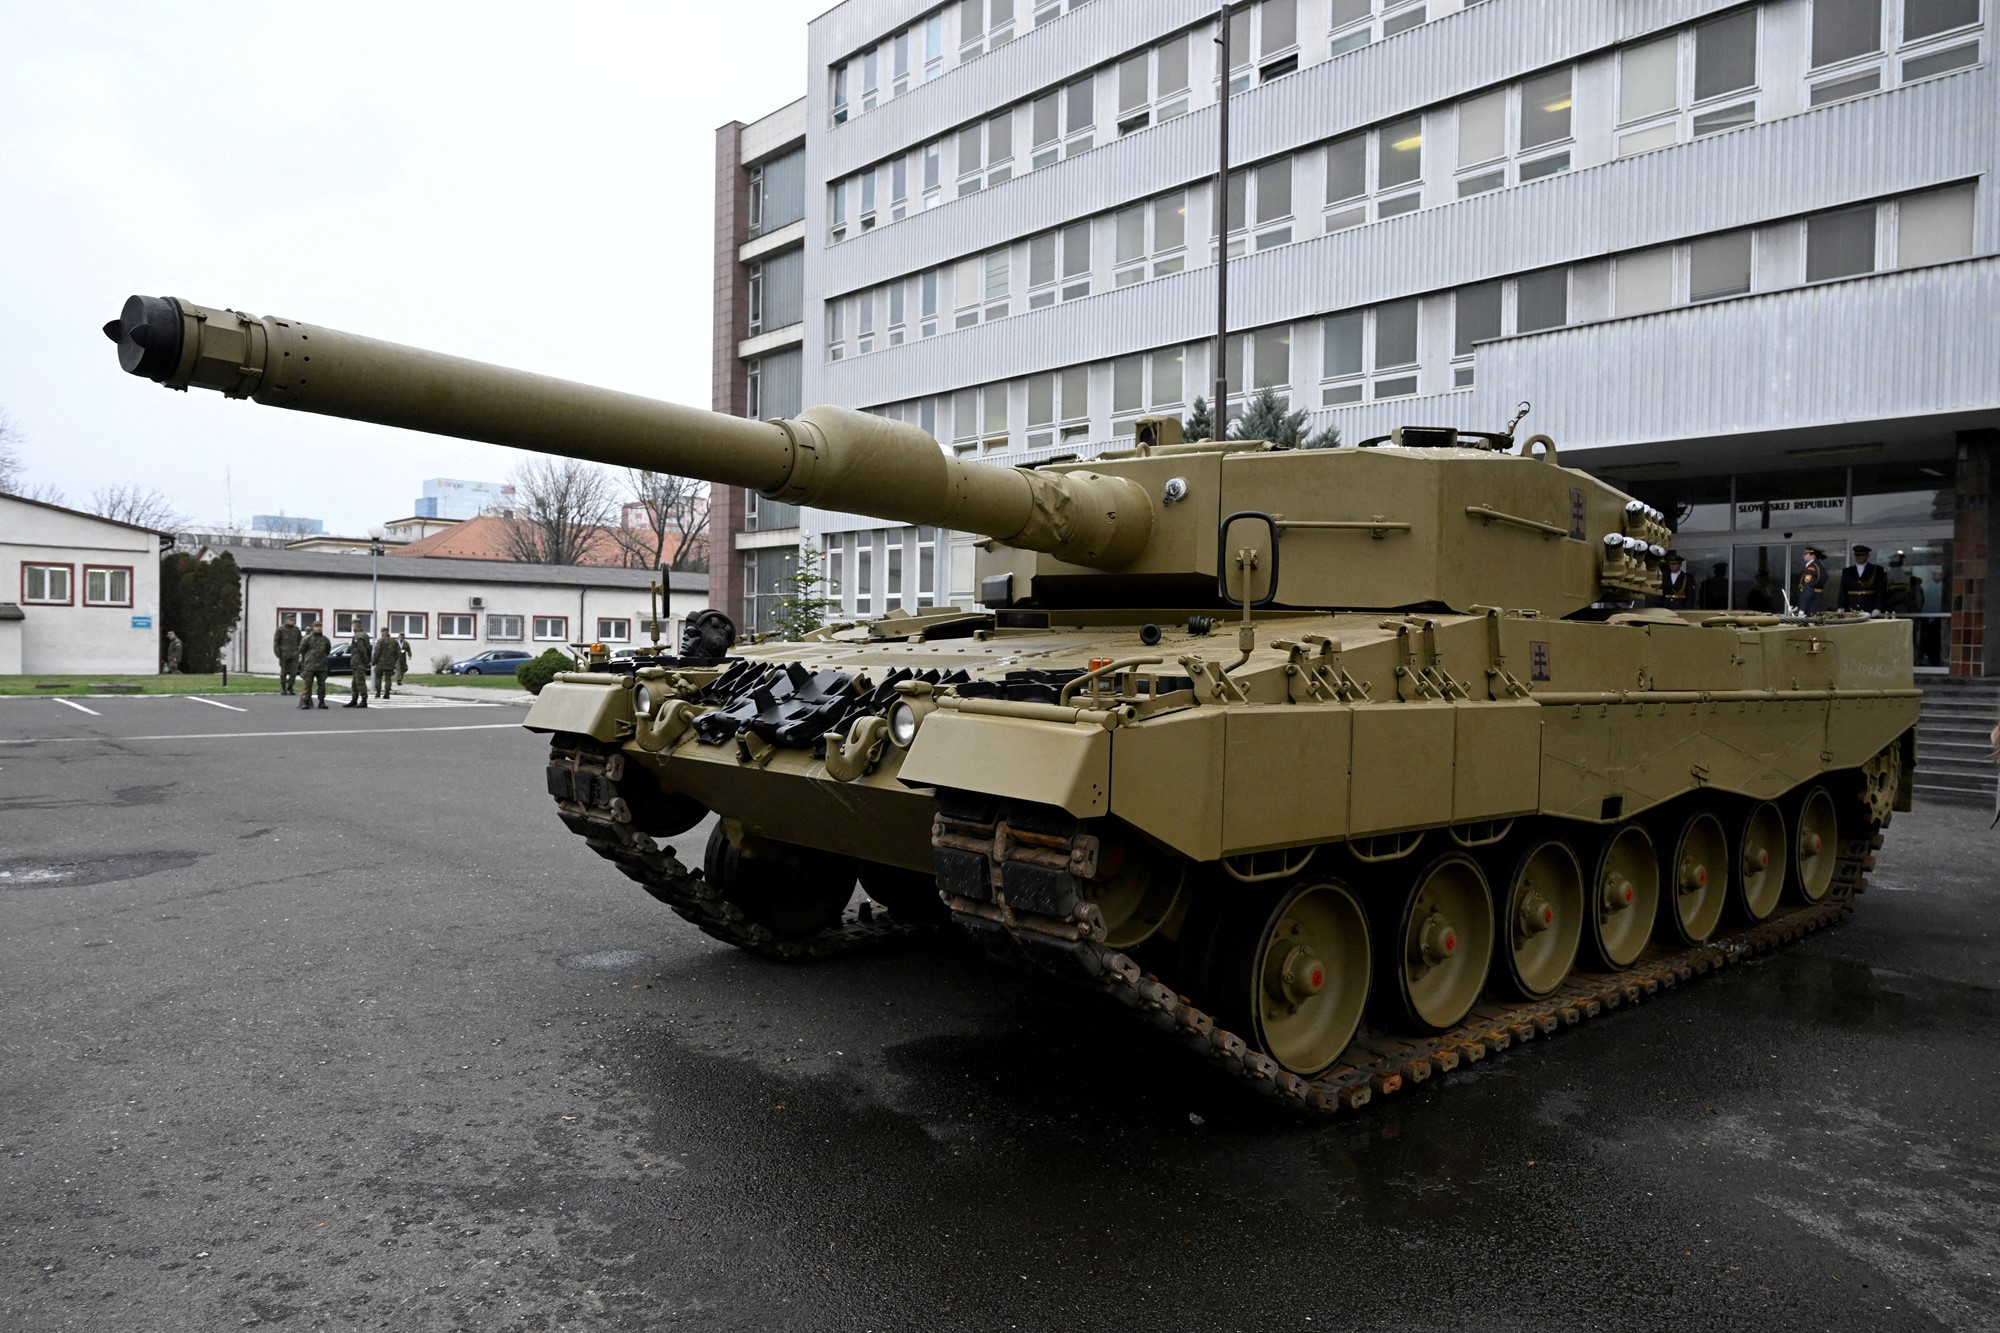 A military tank. 